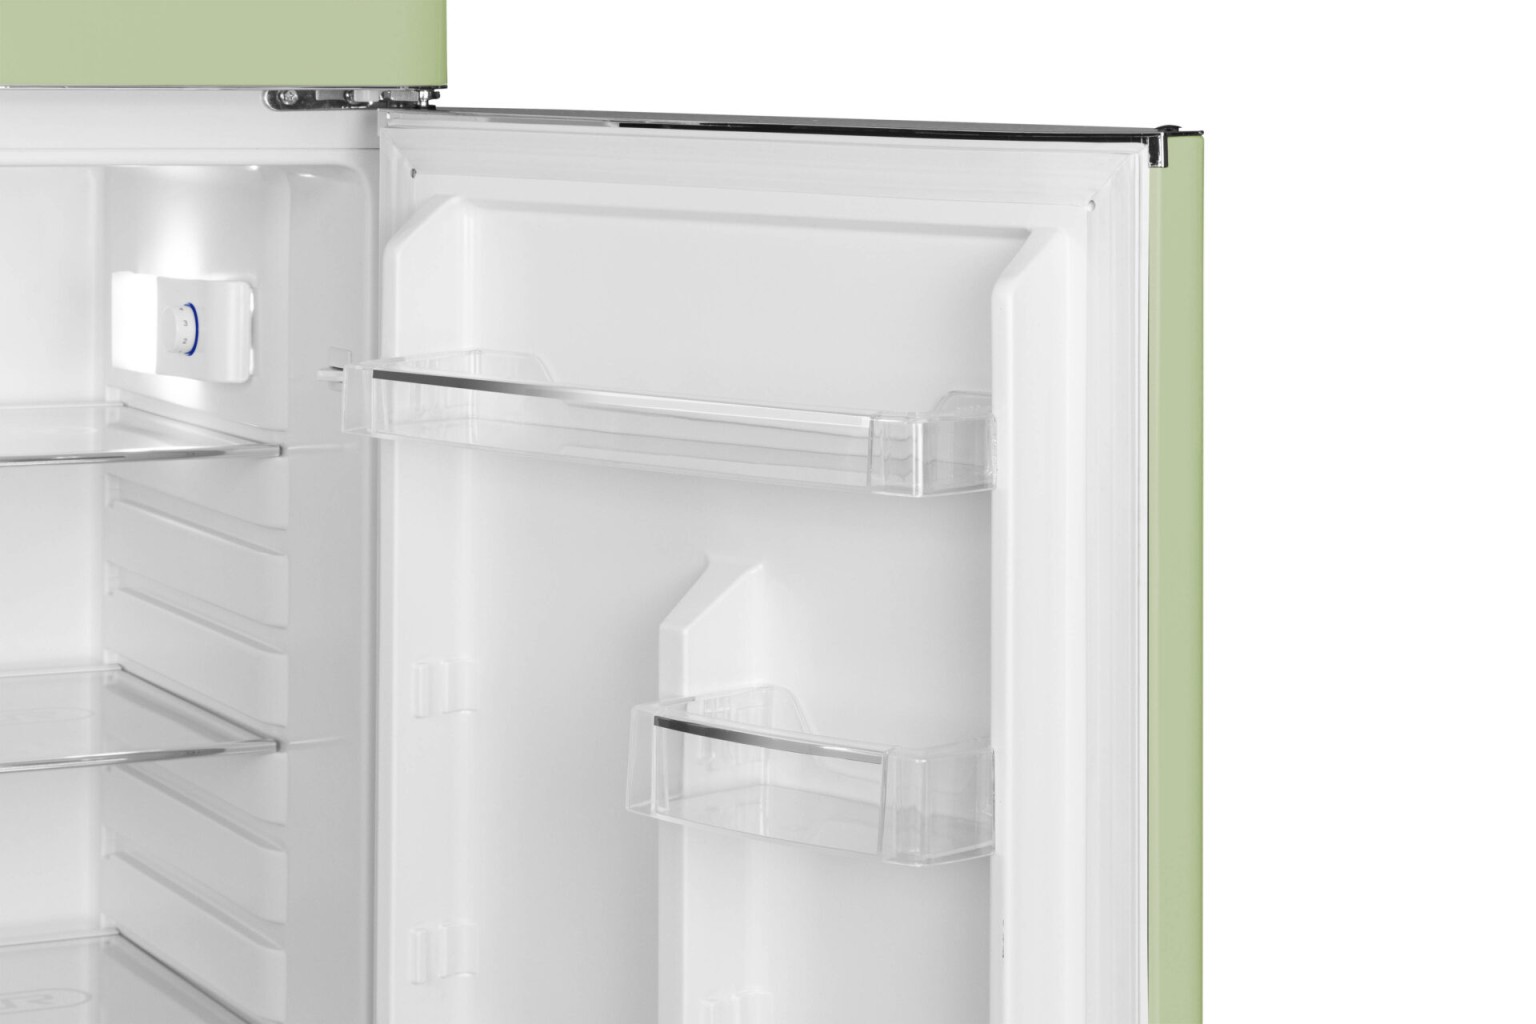 Réfrigérateur vintage vert amande 2 portes 211 L - Schneider - SCDD208VVA